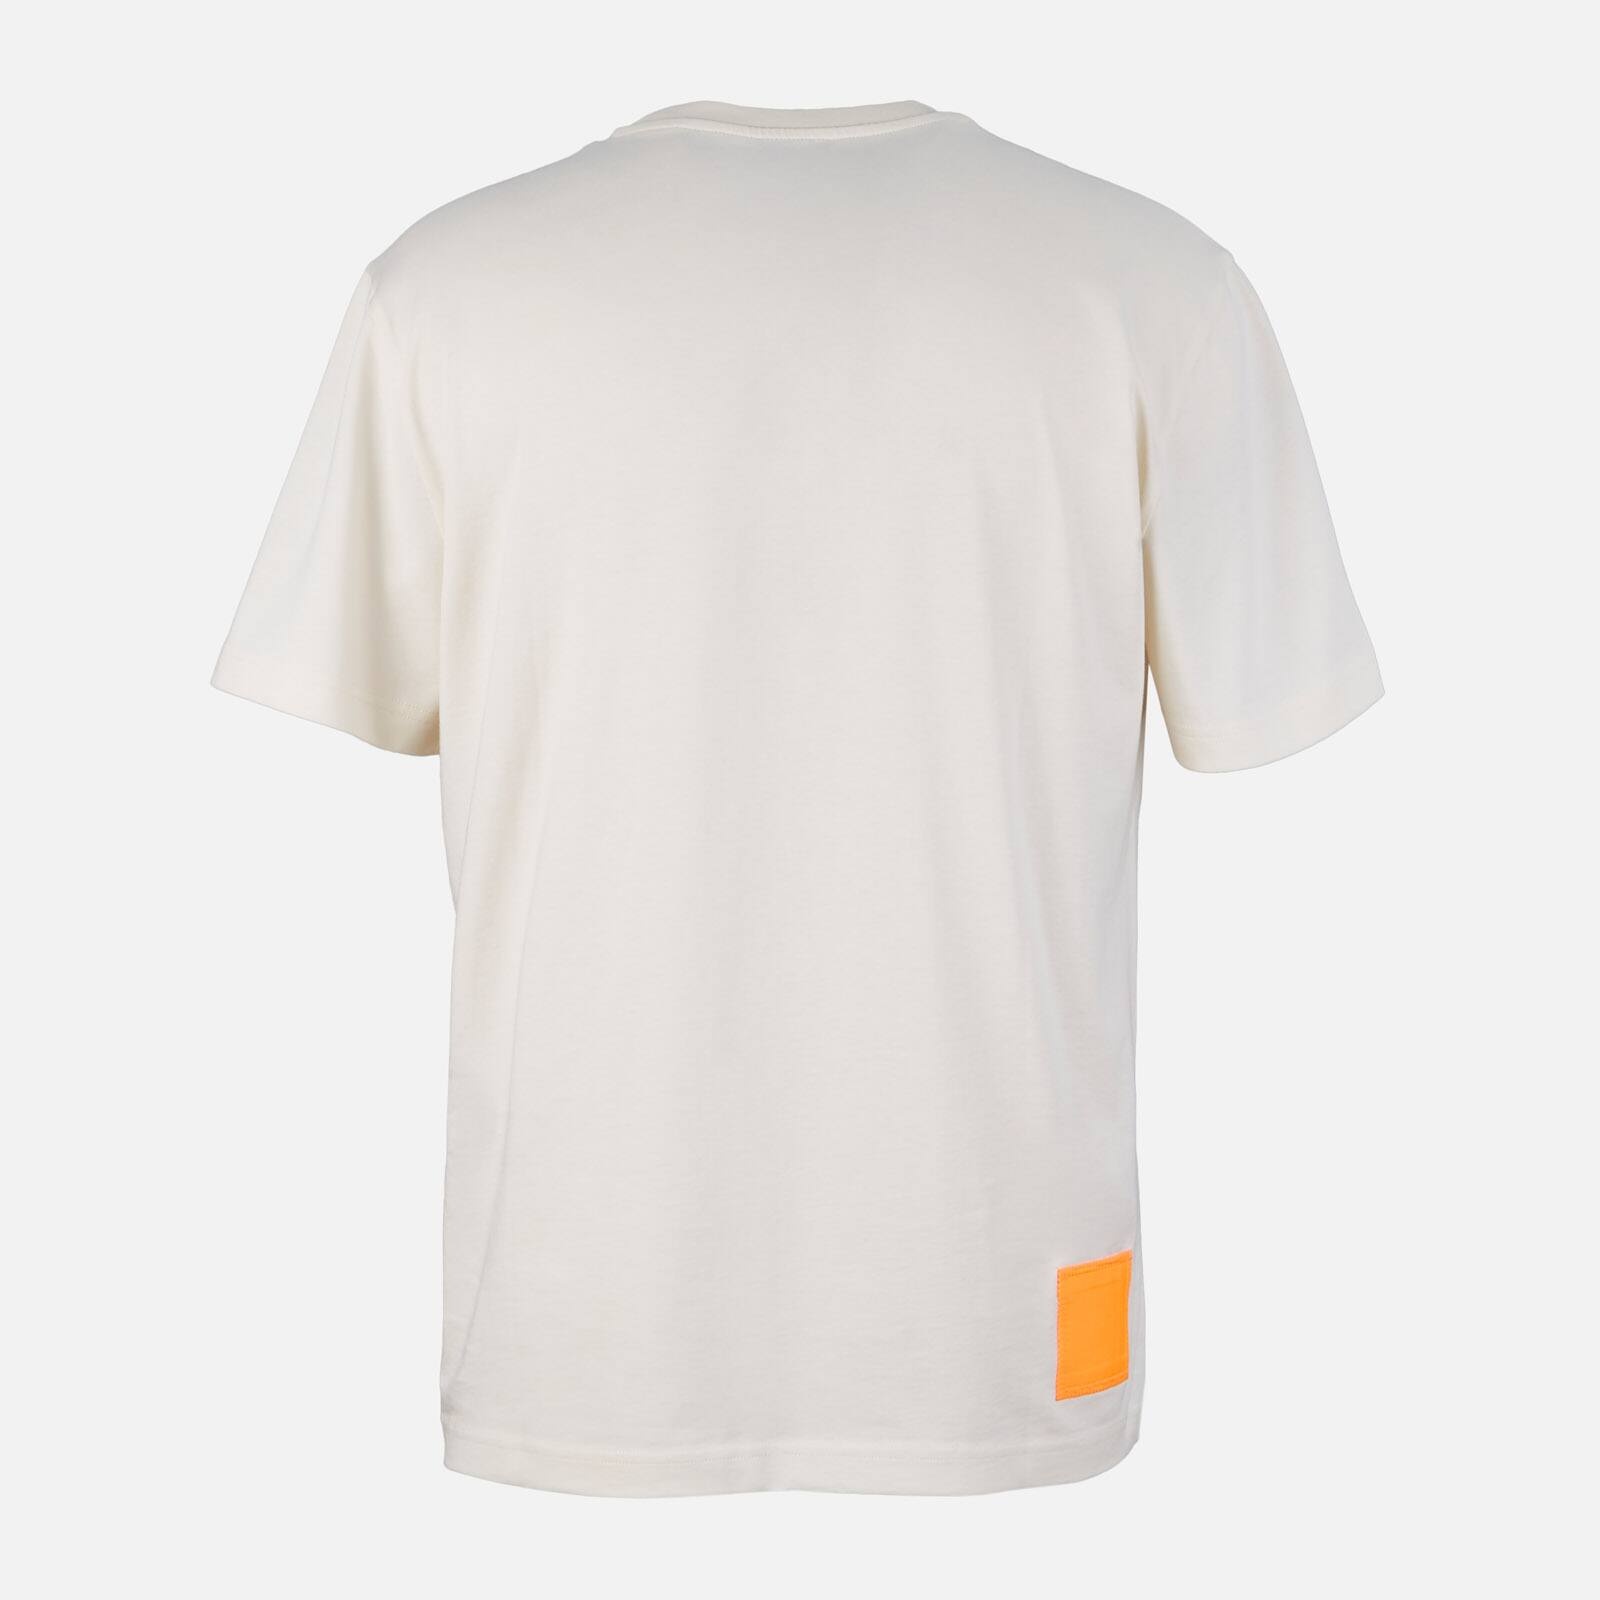 T-shirt in Denim White - 2